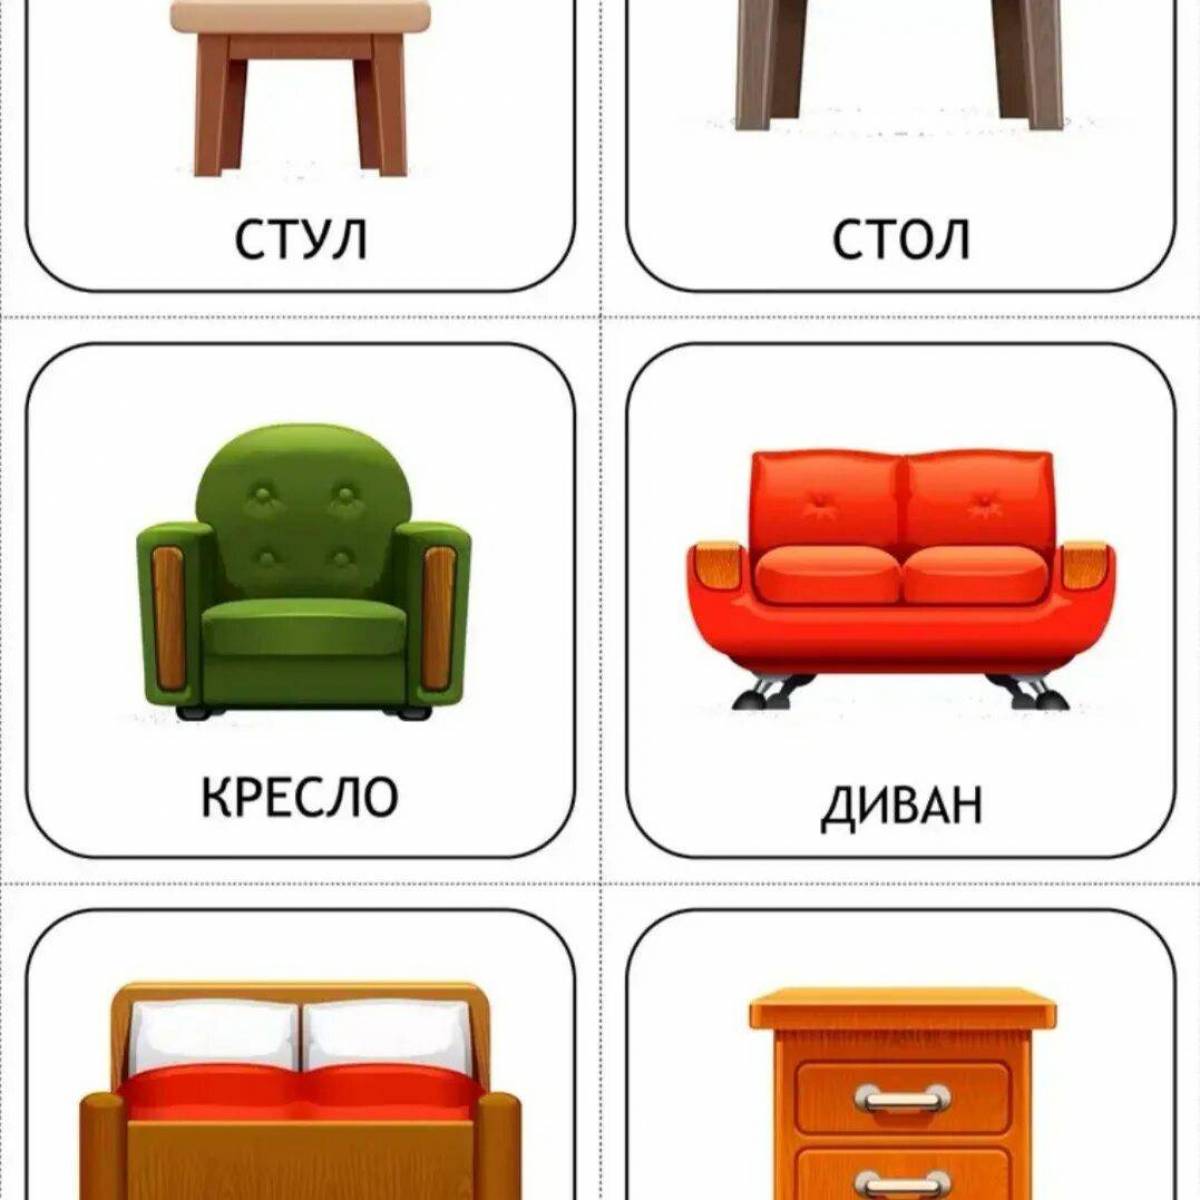 стул предмет мебели мебель